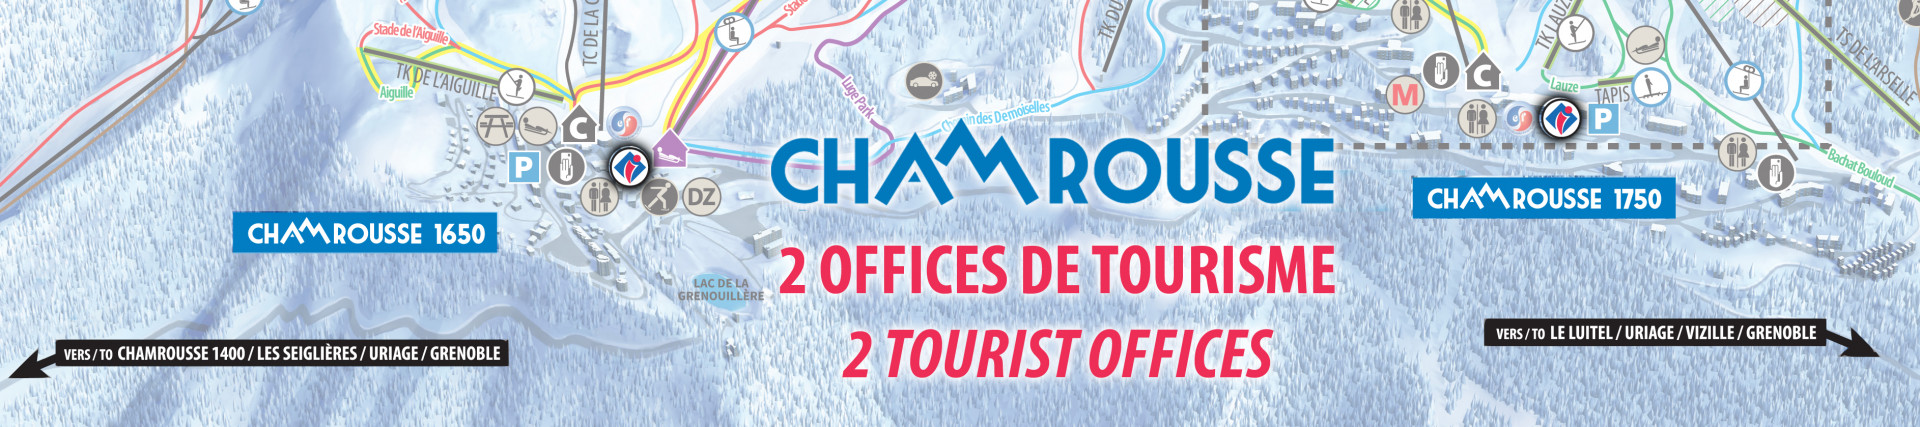 Chamrousse tourist office 1650 1750 map mountain ski resort grenoble isere french alps france